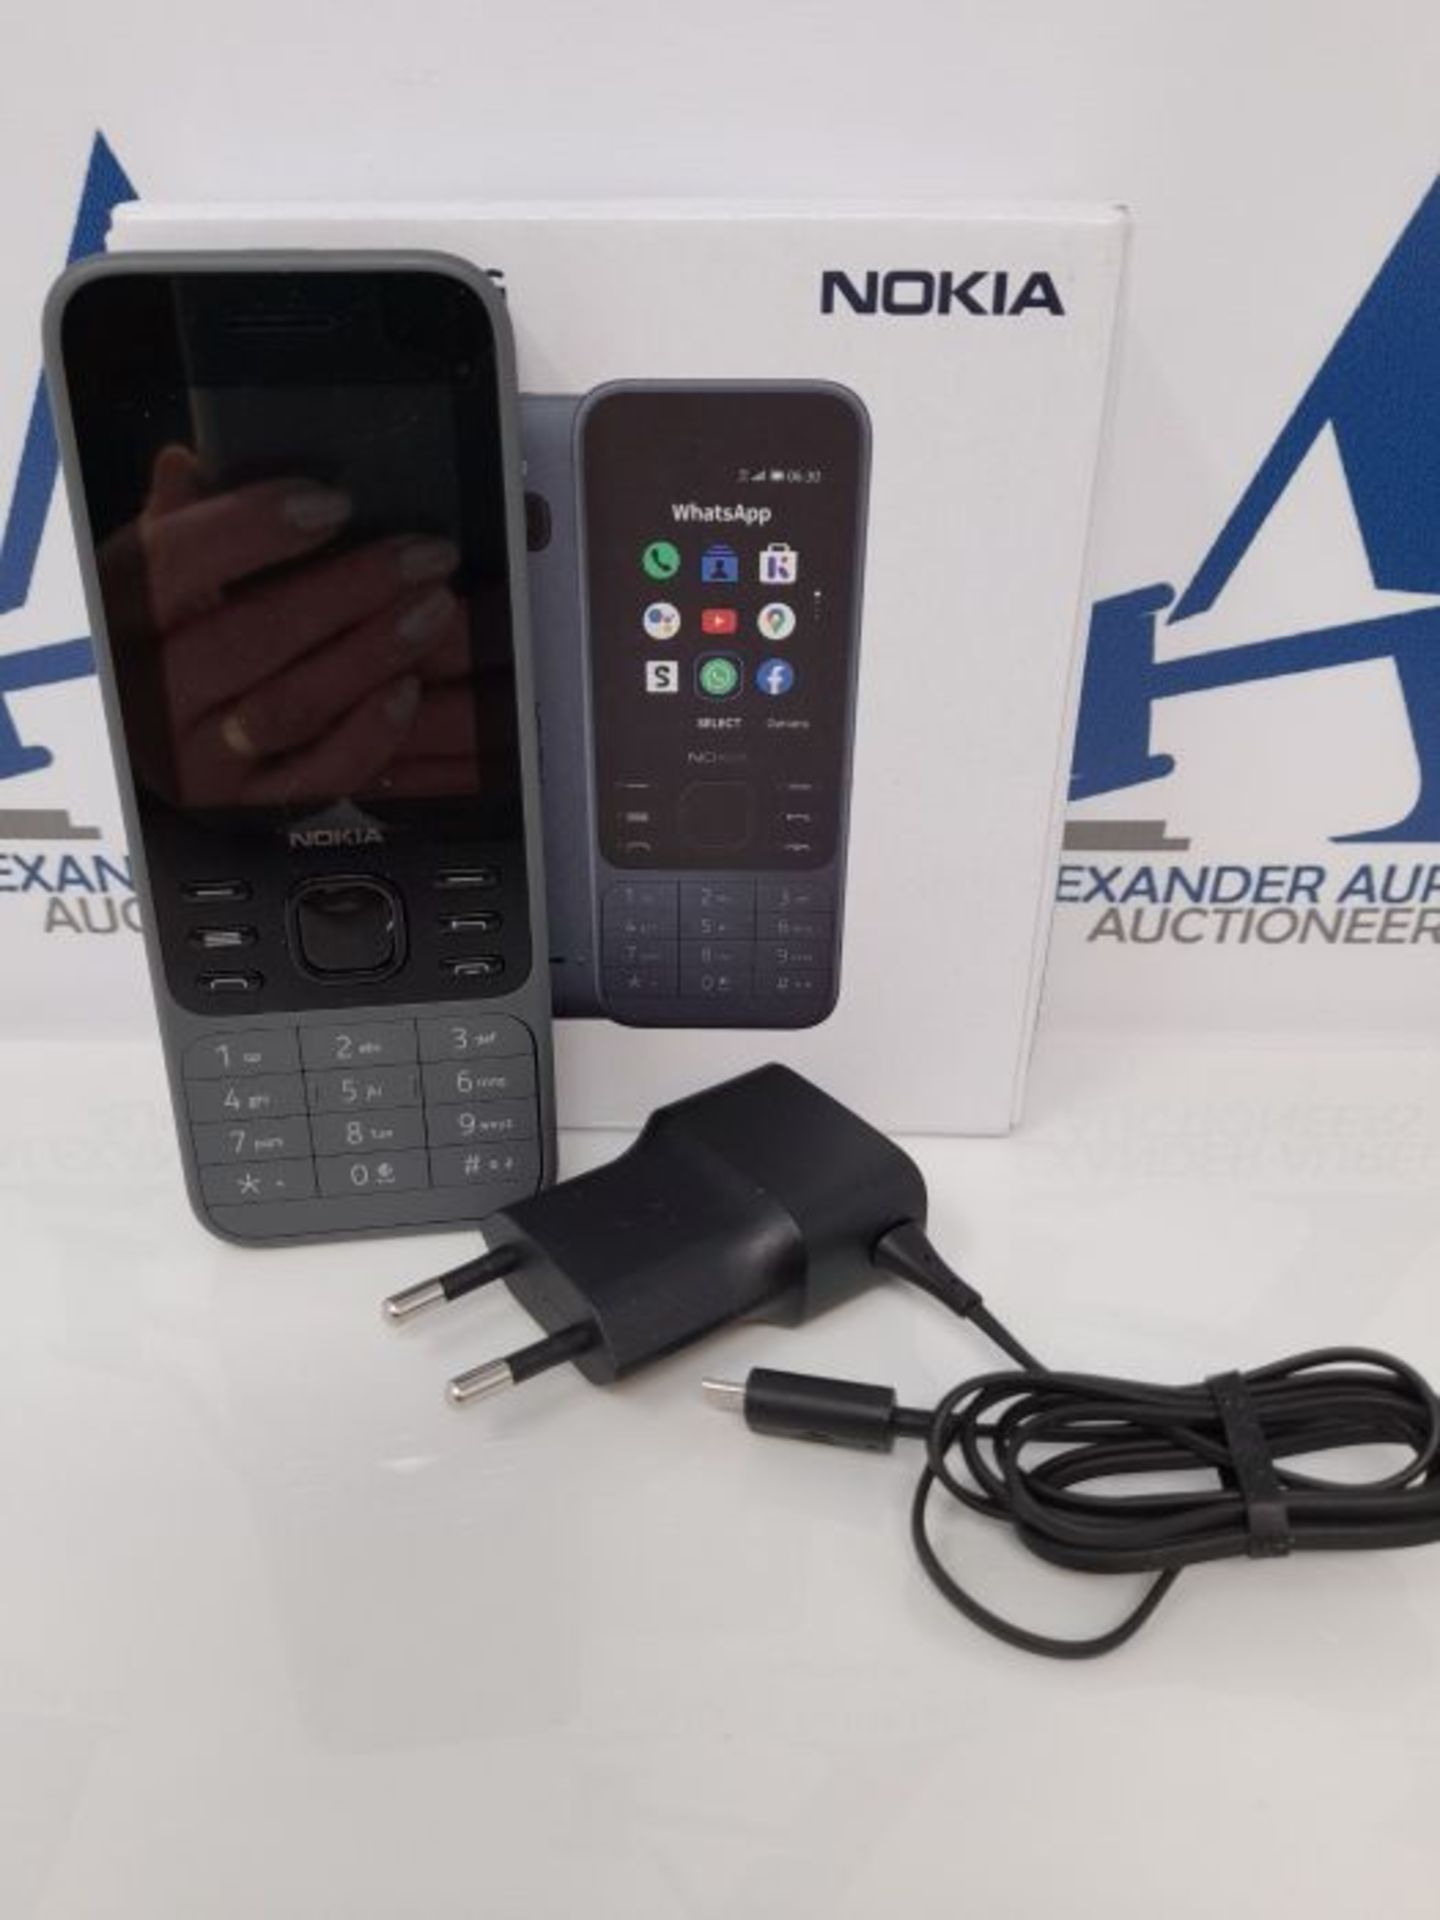 RRP £55.00 Nokia 6300 4G, Feature-Phone mit Einfach-SIM, Whatsapp, Facebook, YouTube, Google Maps